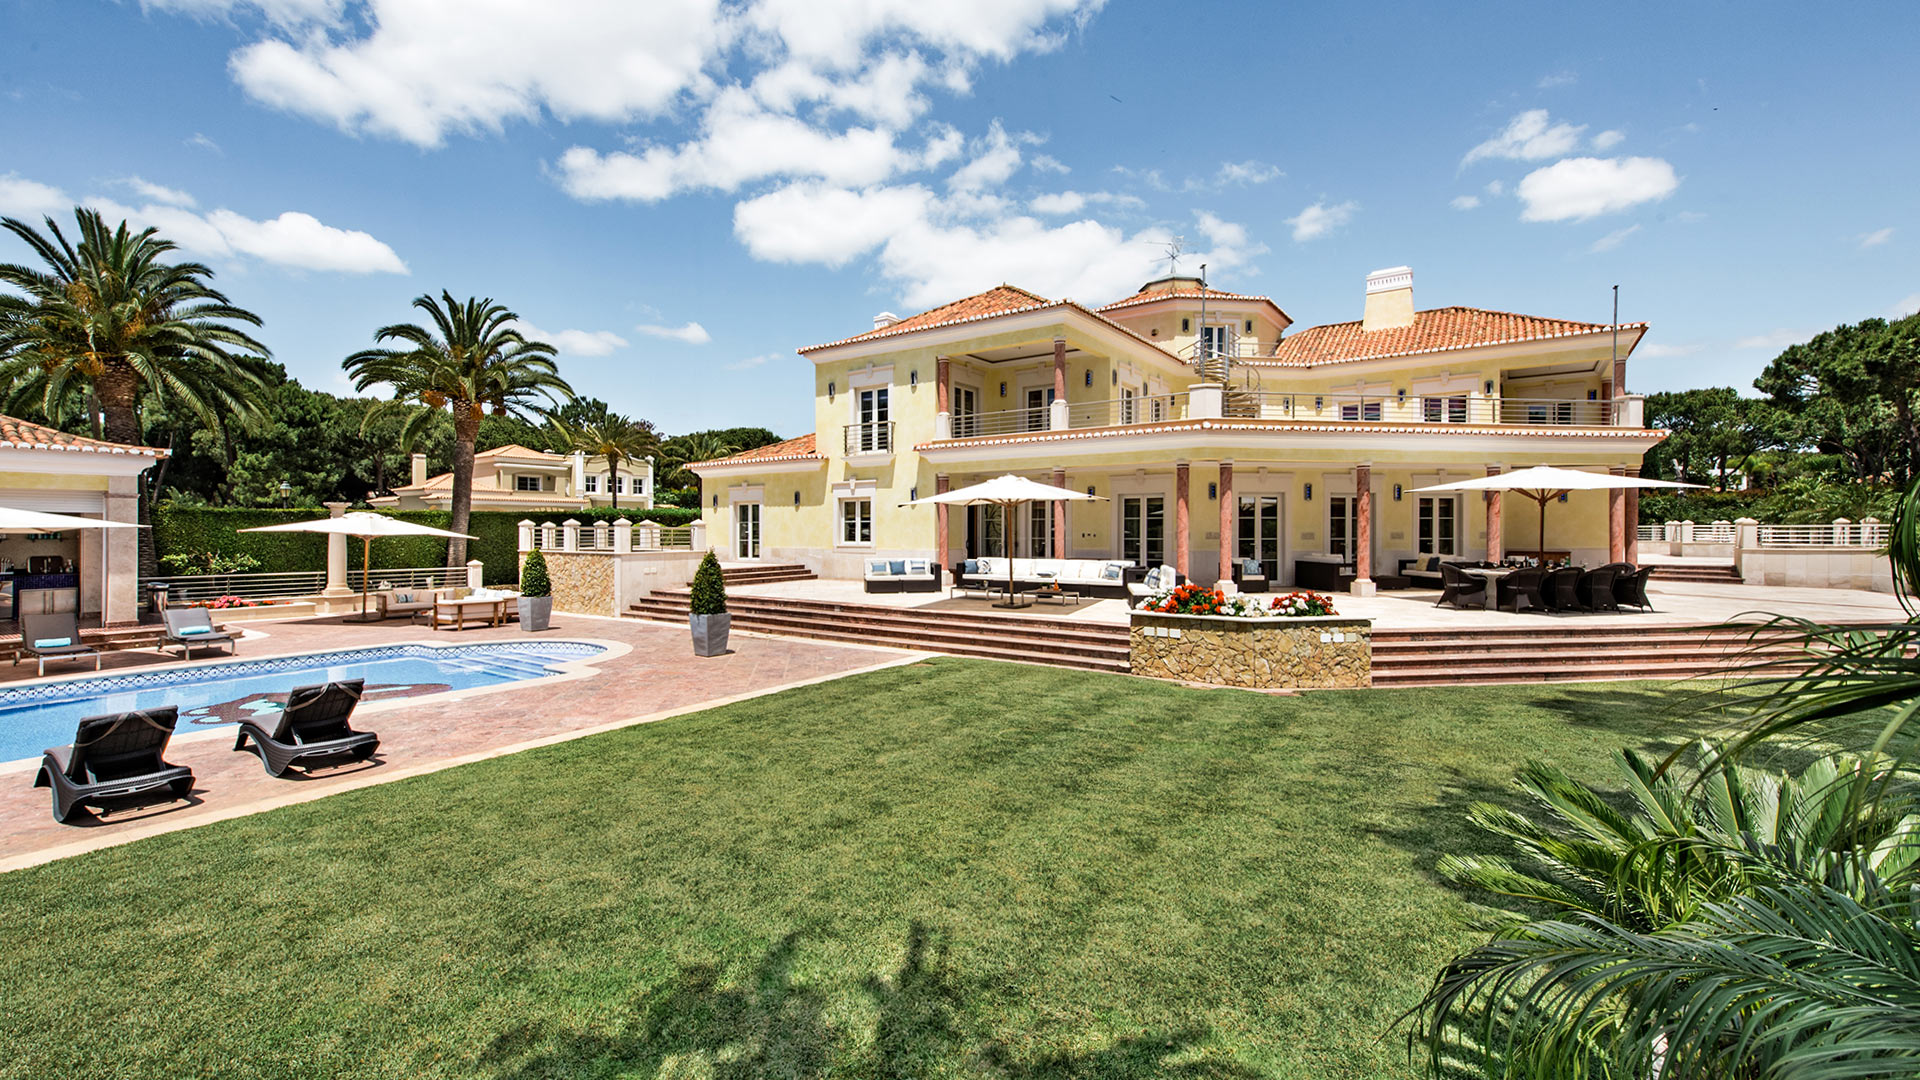 Villa Villa Barkley, Rental in Algarve